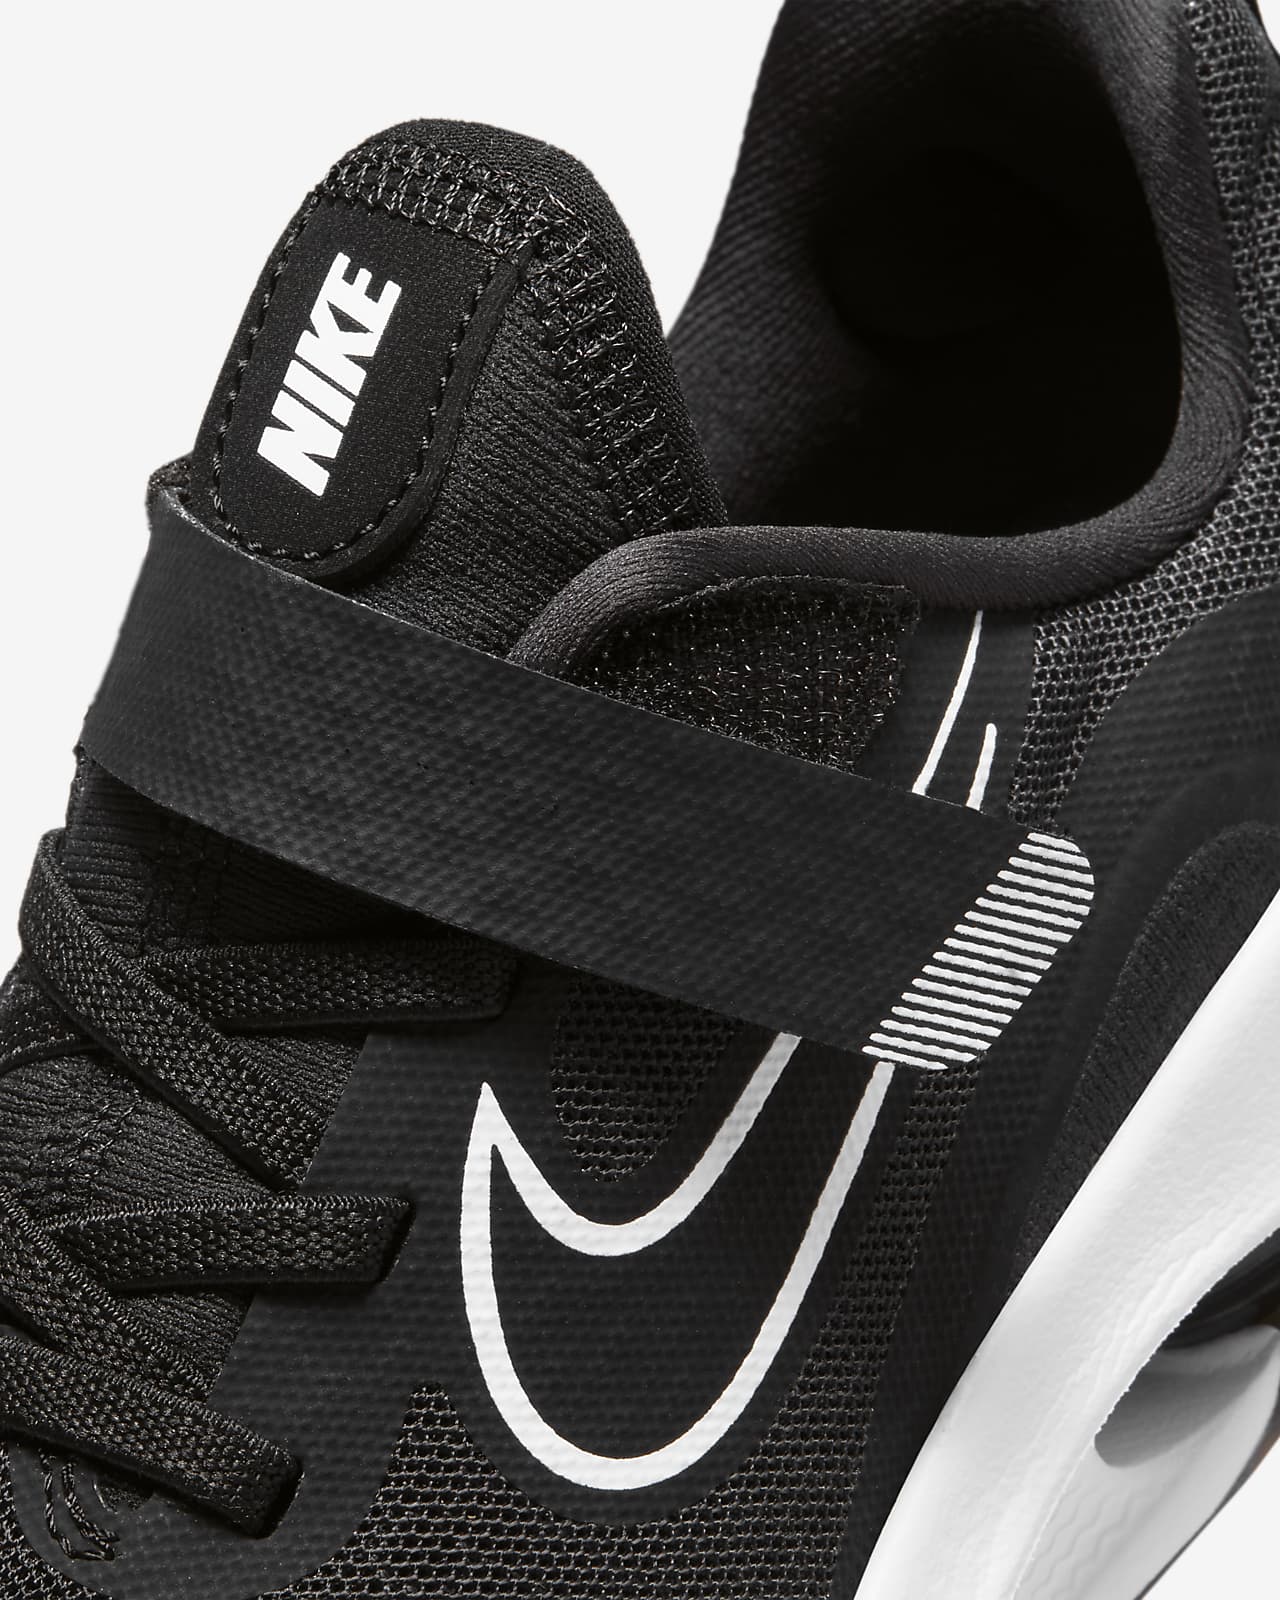 Chaussures Nike enfant